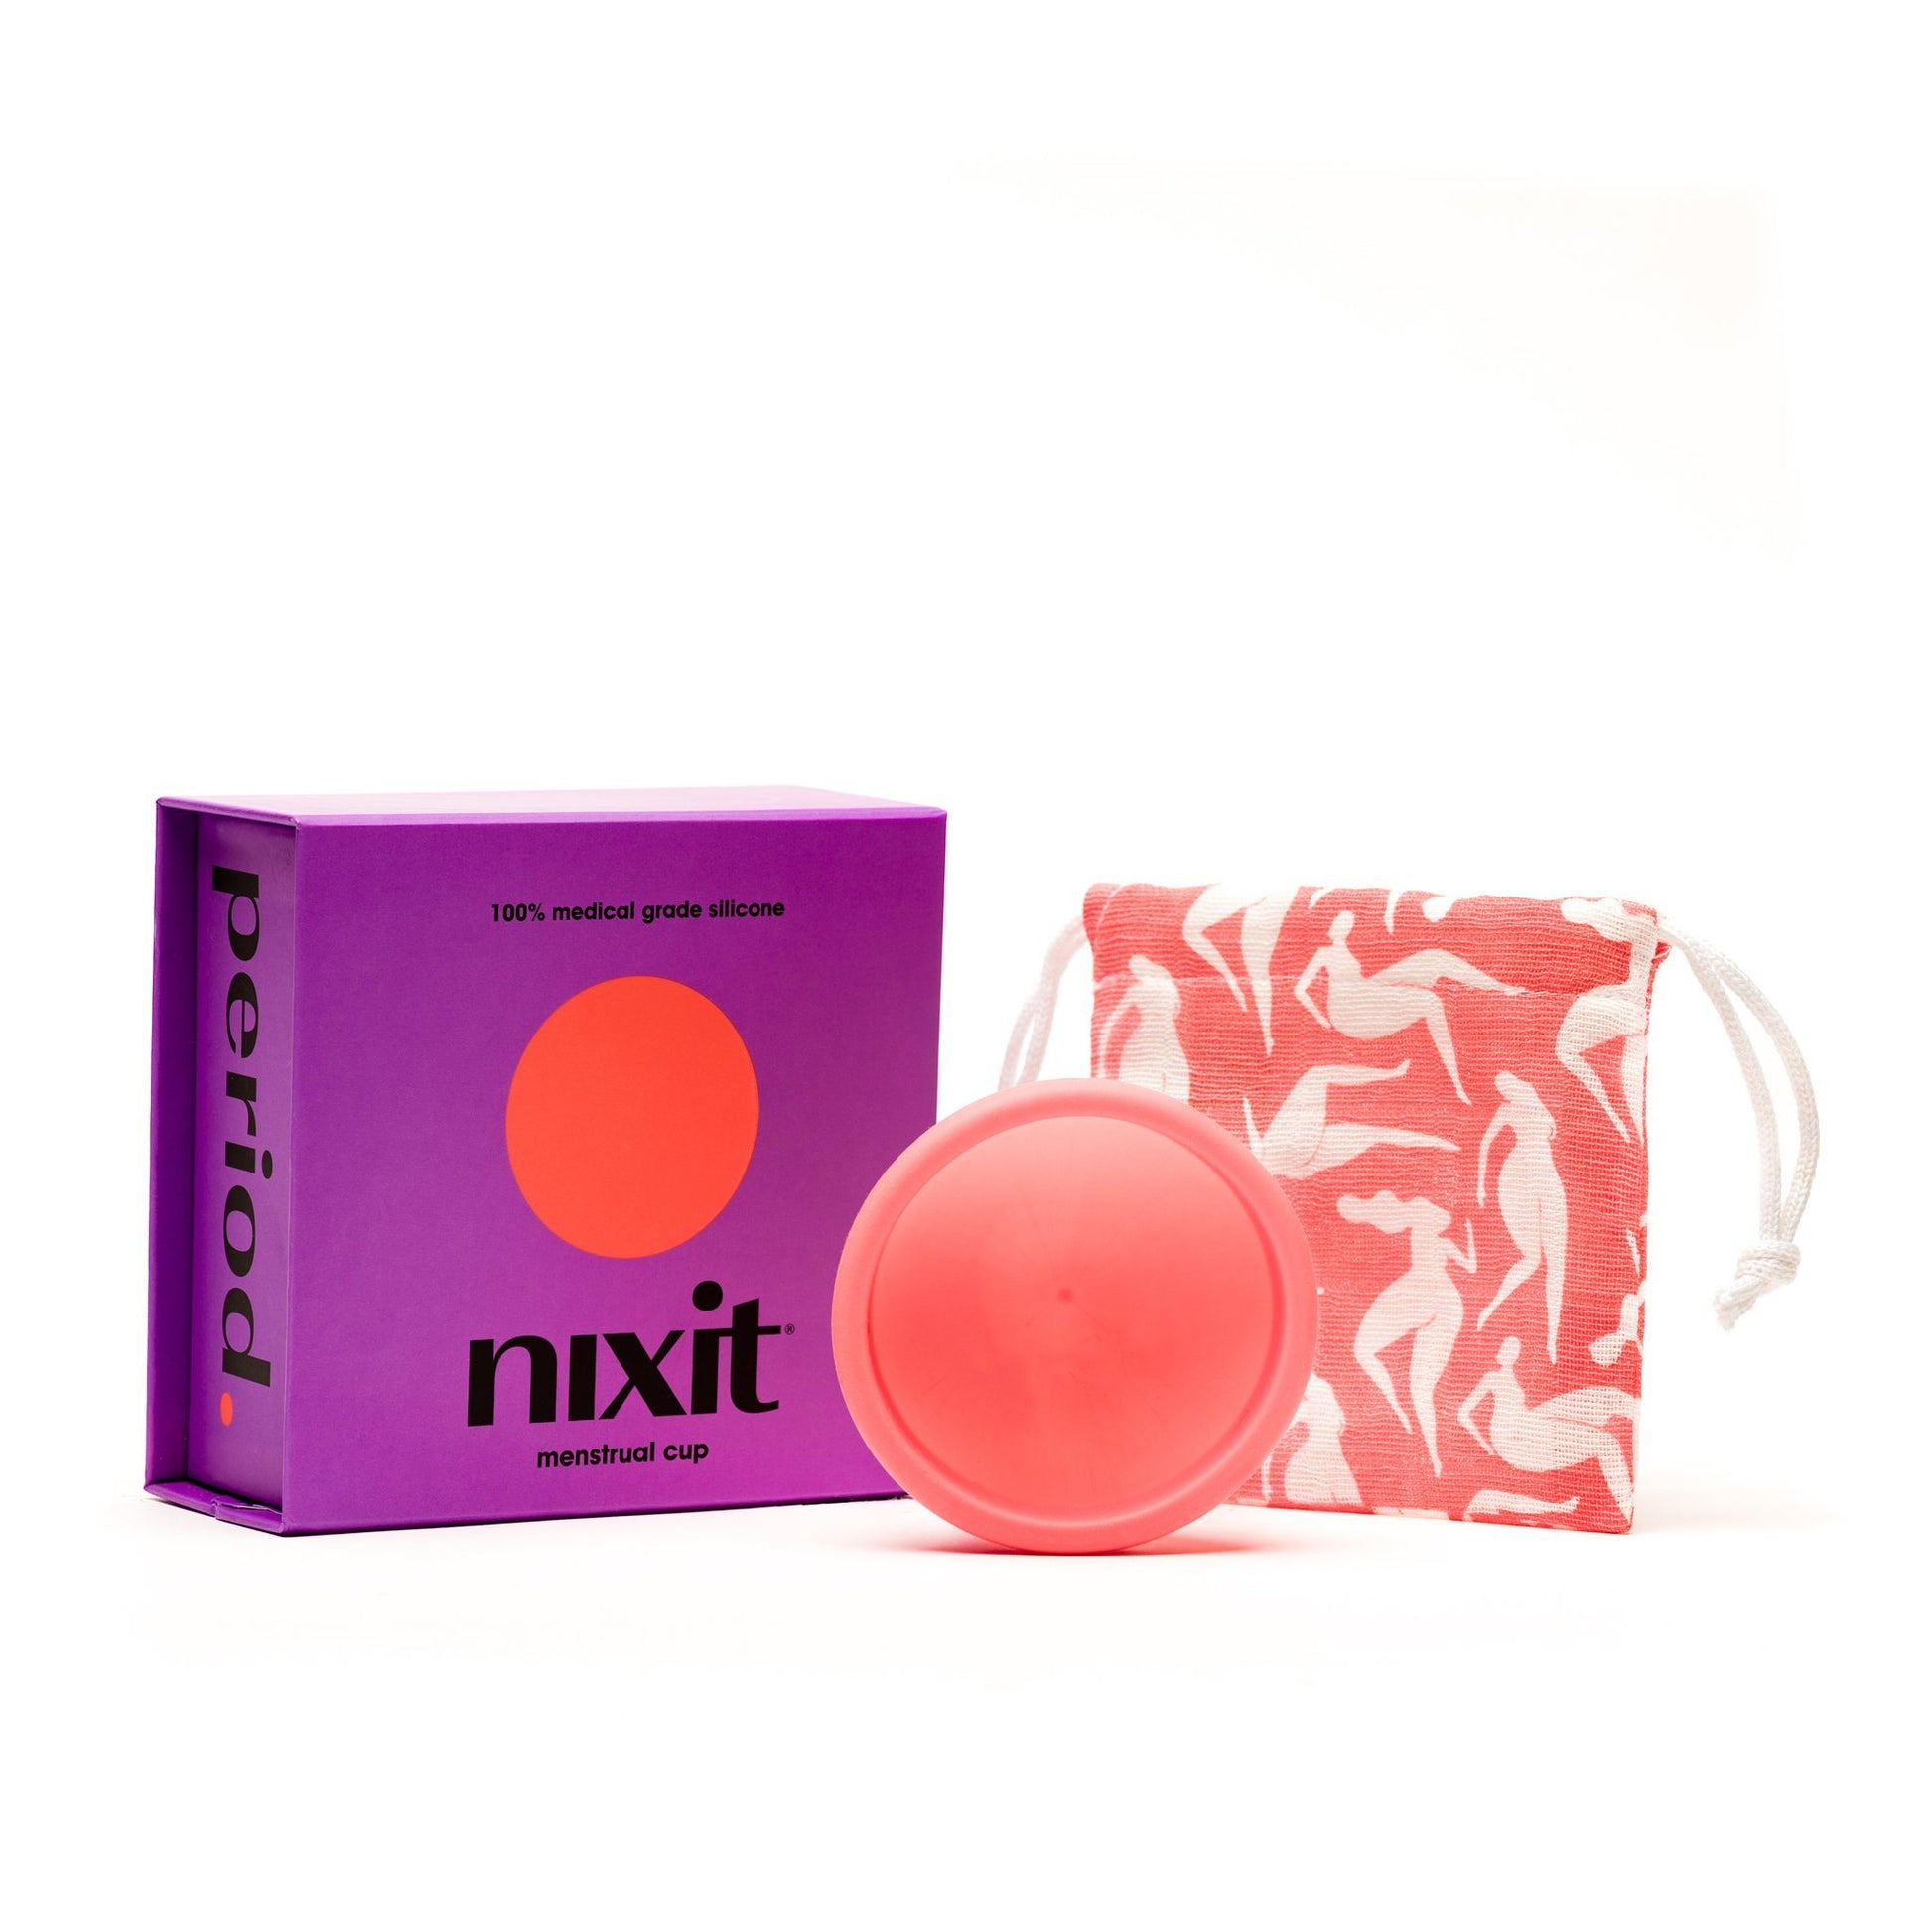 Nixit Menstrual Cup Wipes 15 Packs